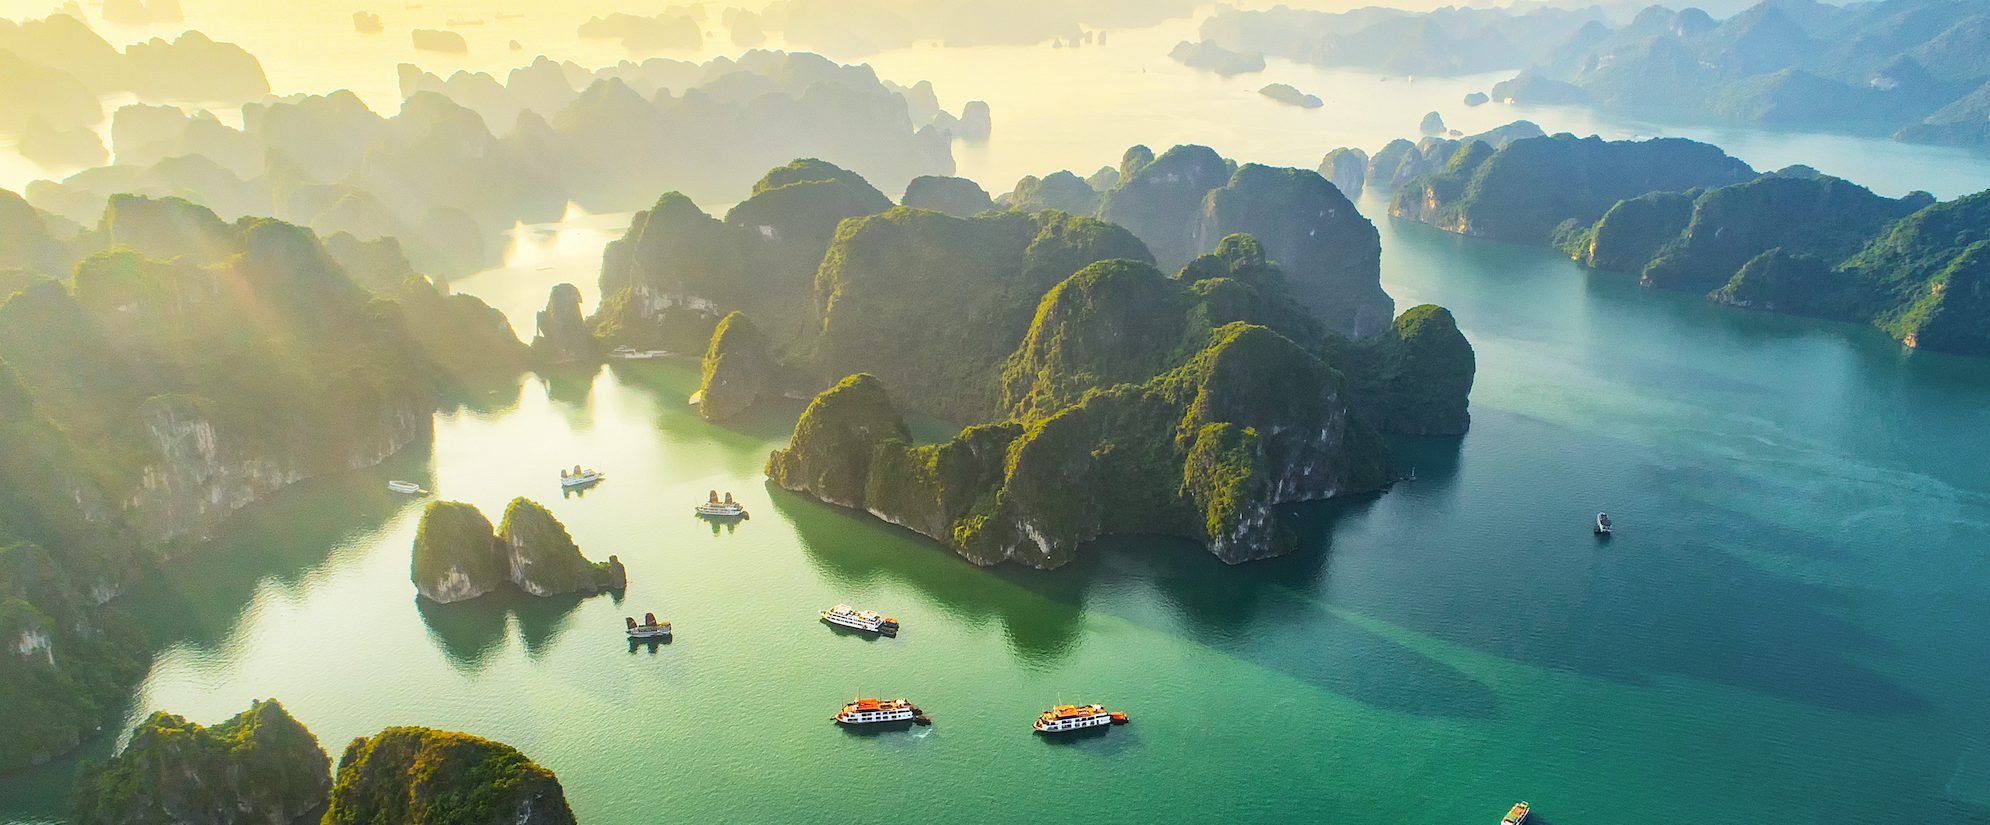 Vietnam Travel Guide: Halong Bay